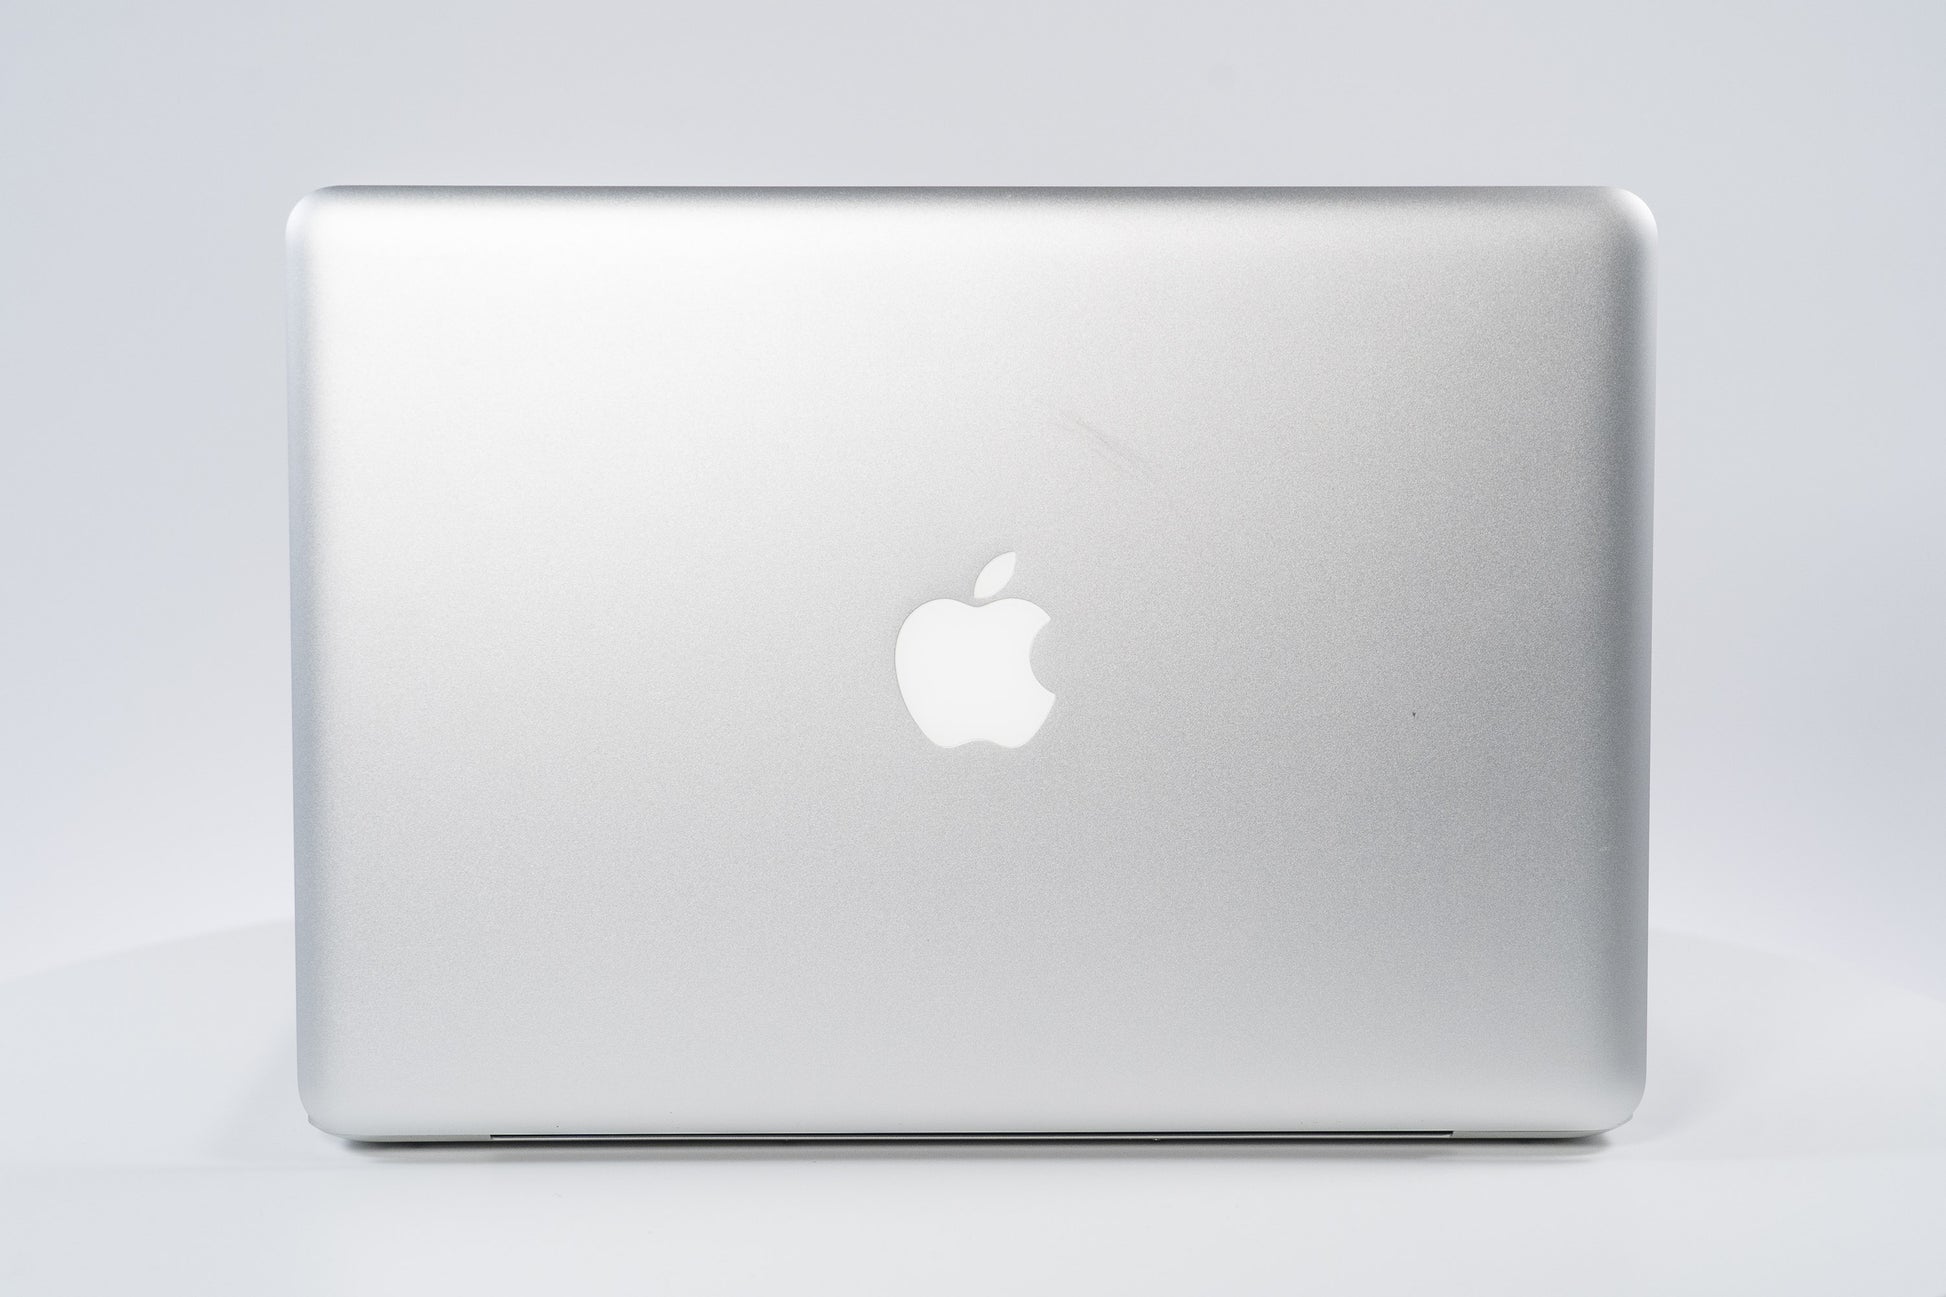 Apple MacBook Pro (13-inch Early 2011) 2.7 GHz i7-2620M 4GB 500GB HDD (Silver)